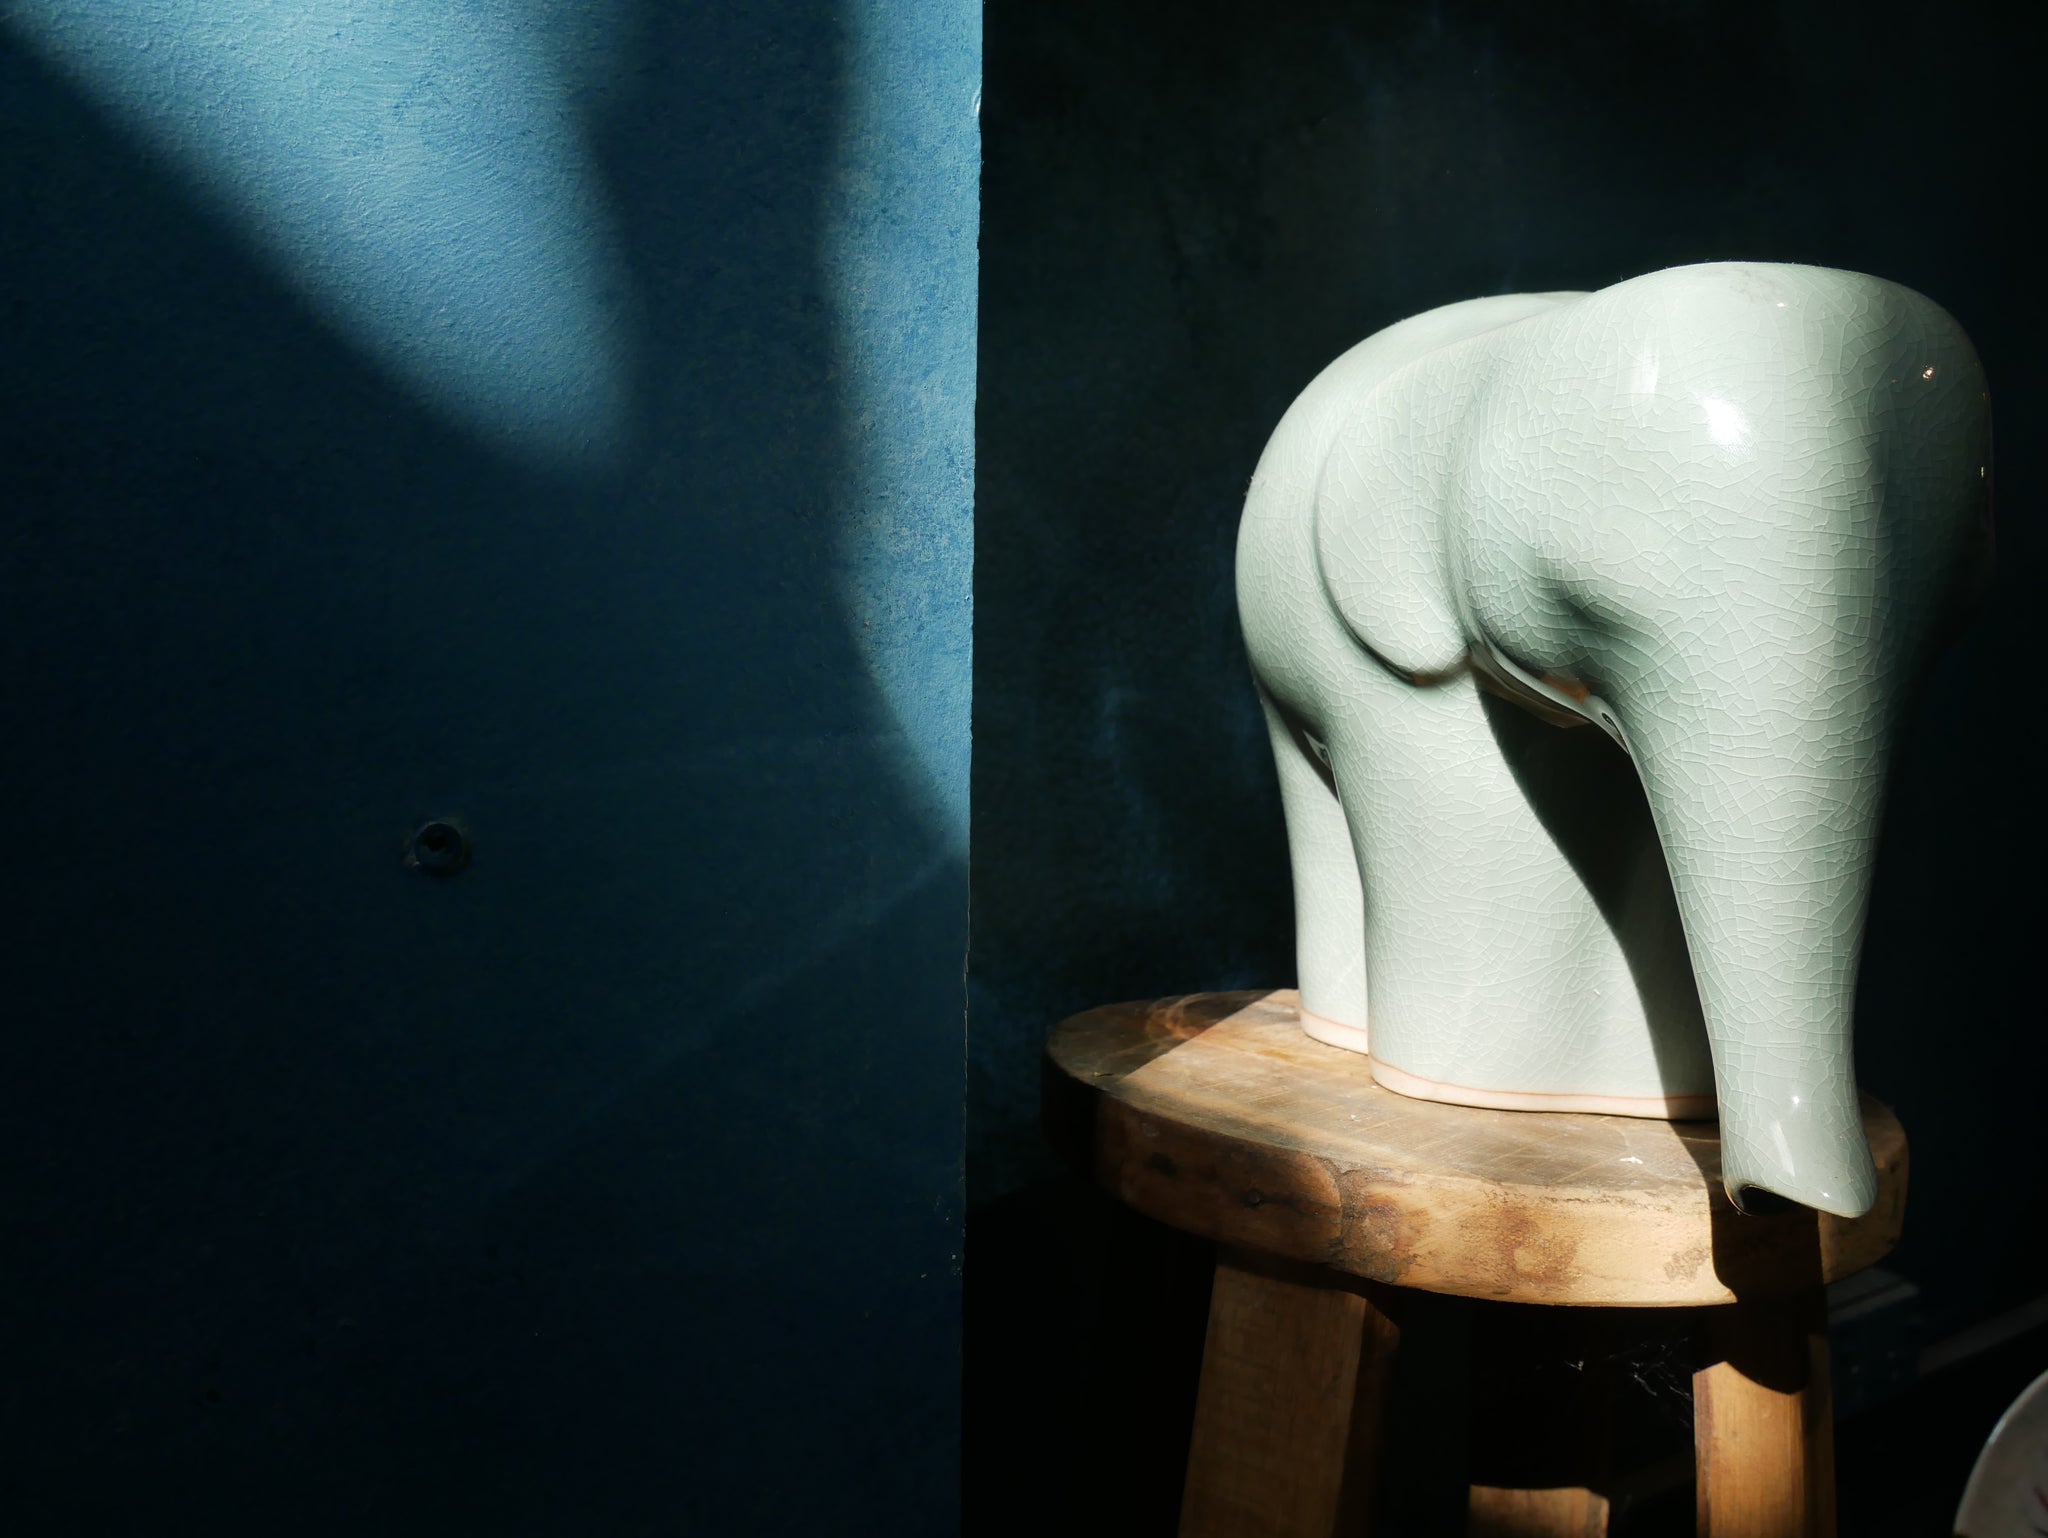 Green Celadon Elephant - II